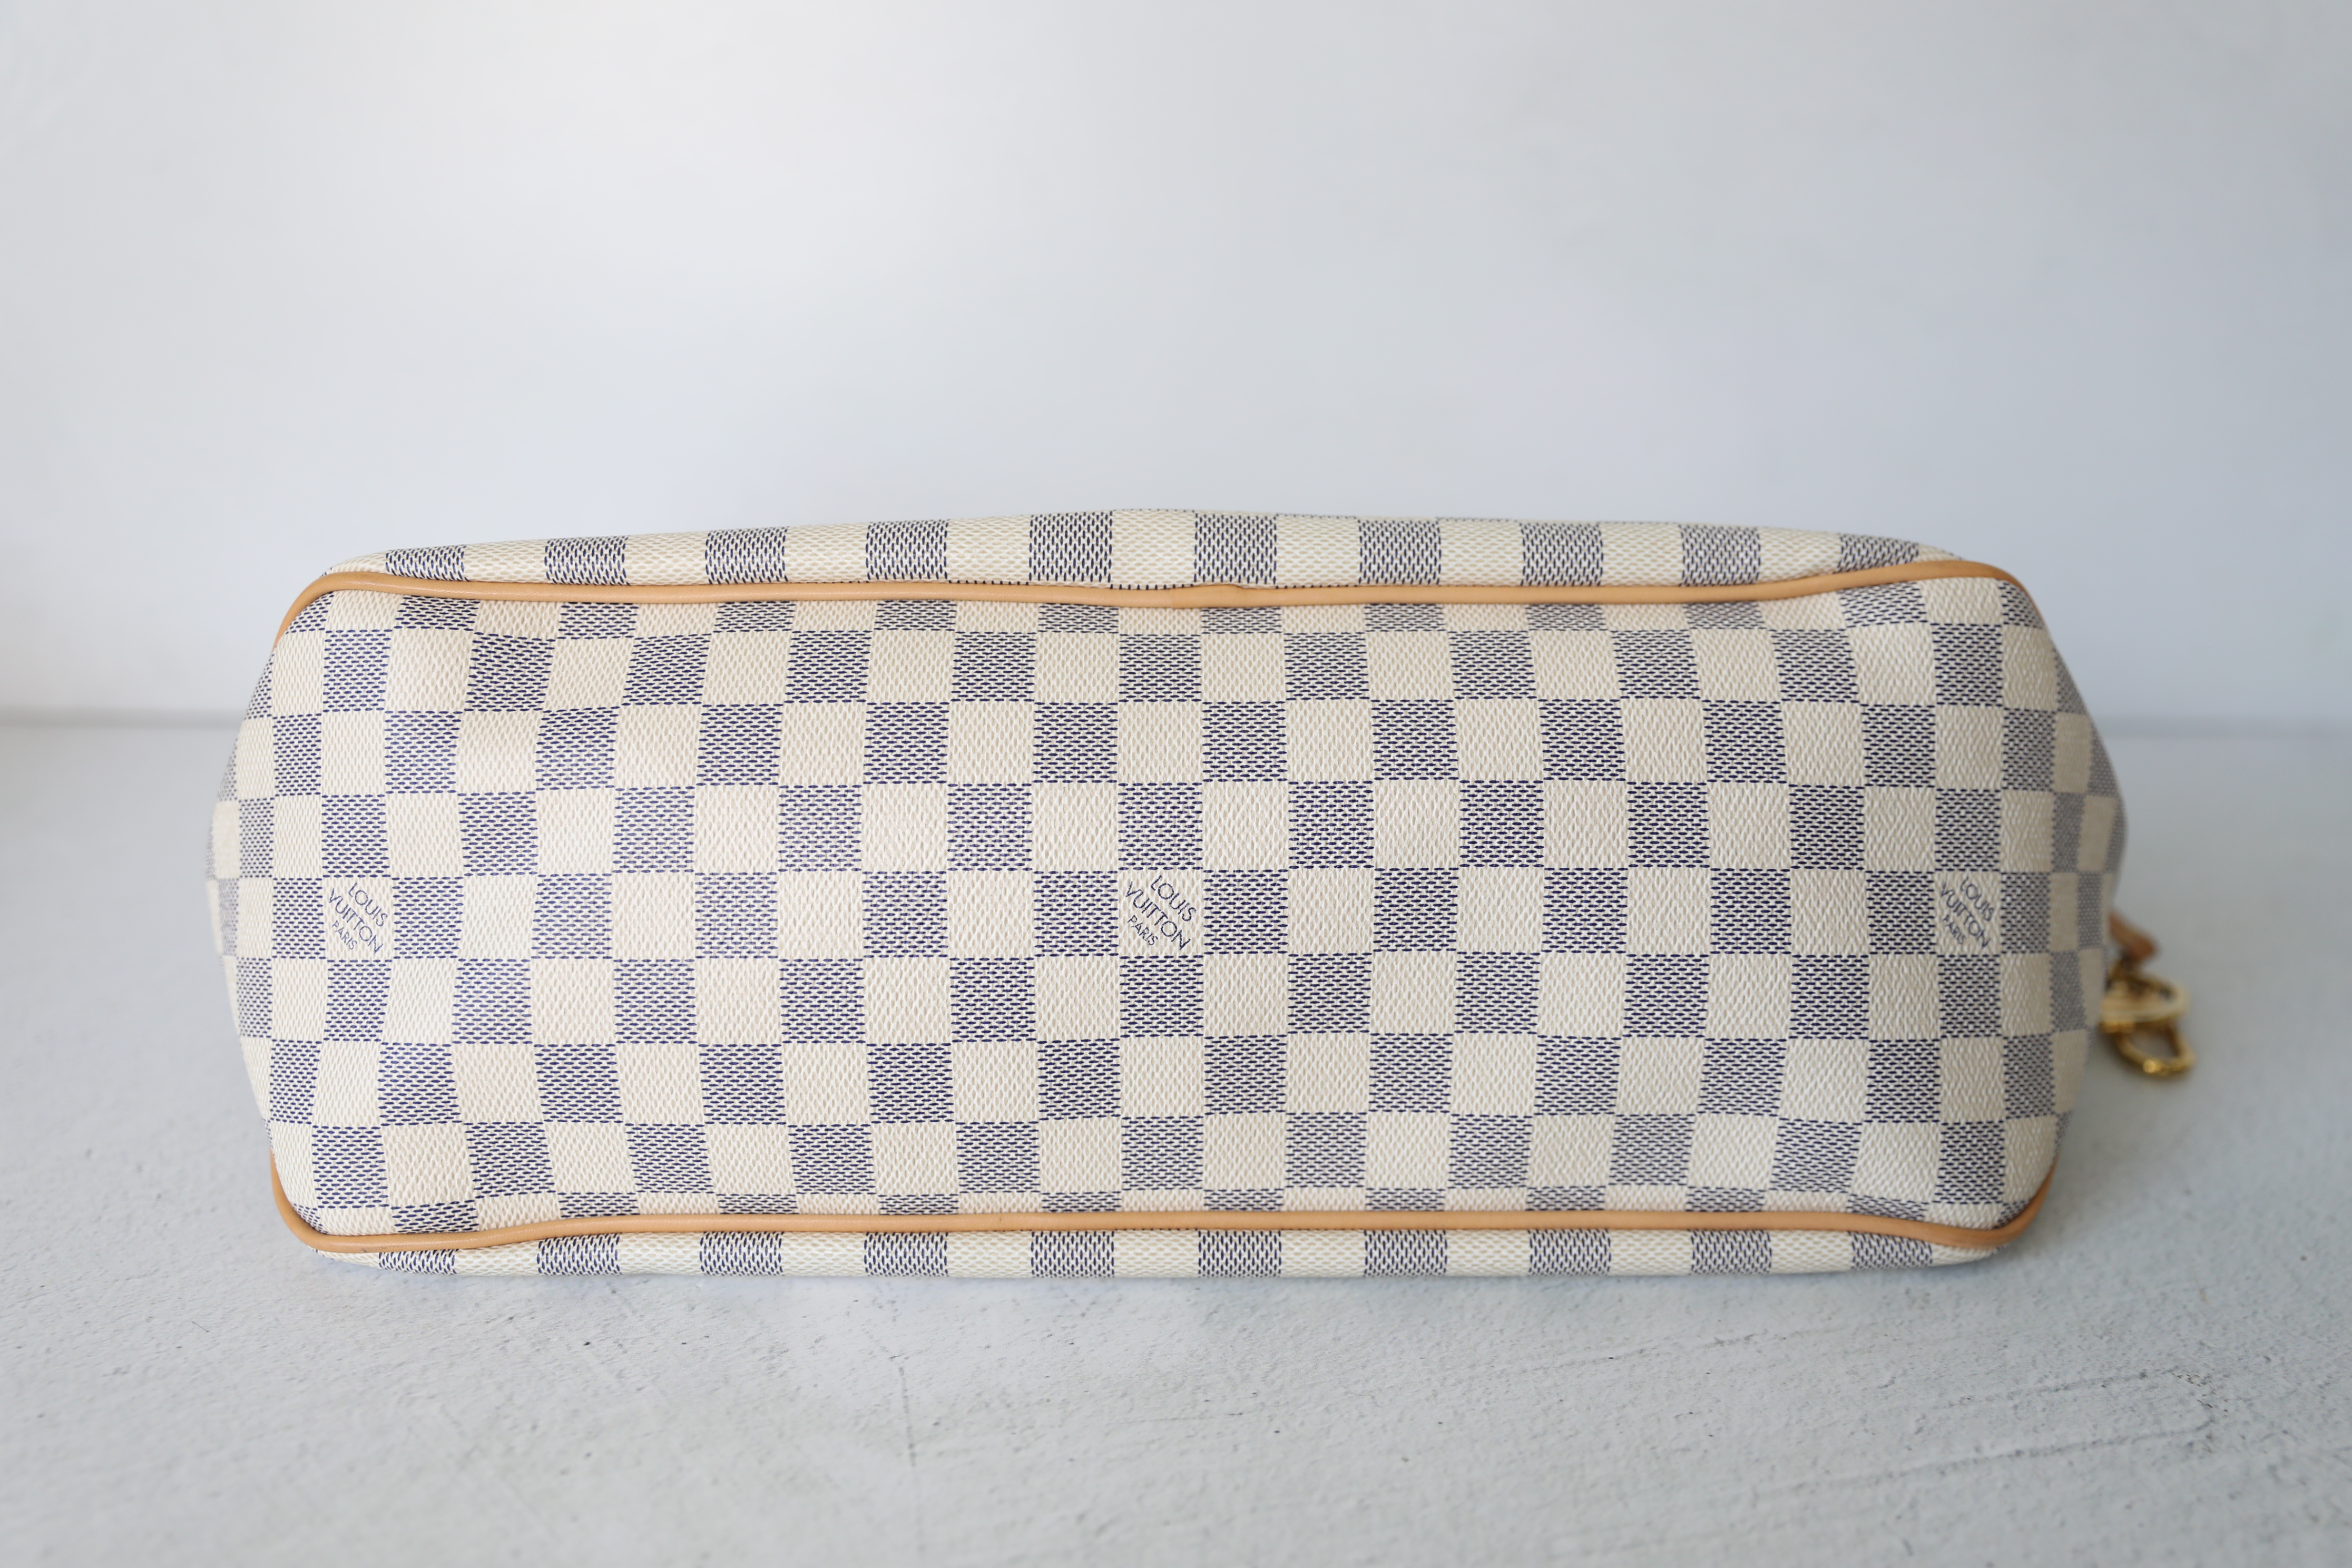 Garage Luxe - Louis Vuitton Delightful Damier Azur Bag with Long Strap Good  Condition *HOT OFFER*:400$ + VAT(44$) #louisvuitton #fashion